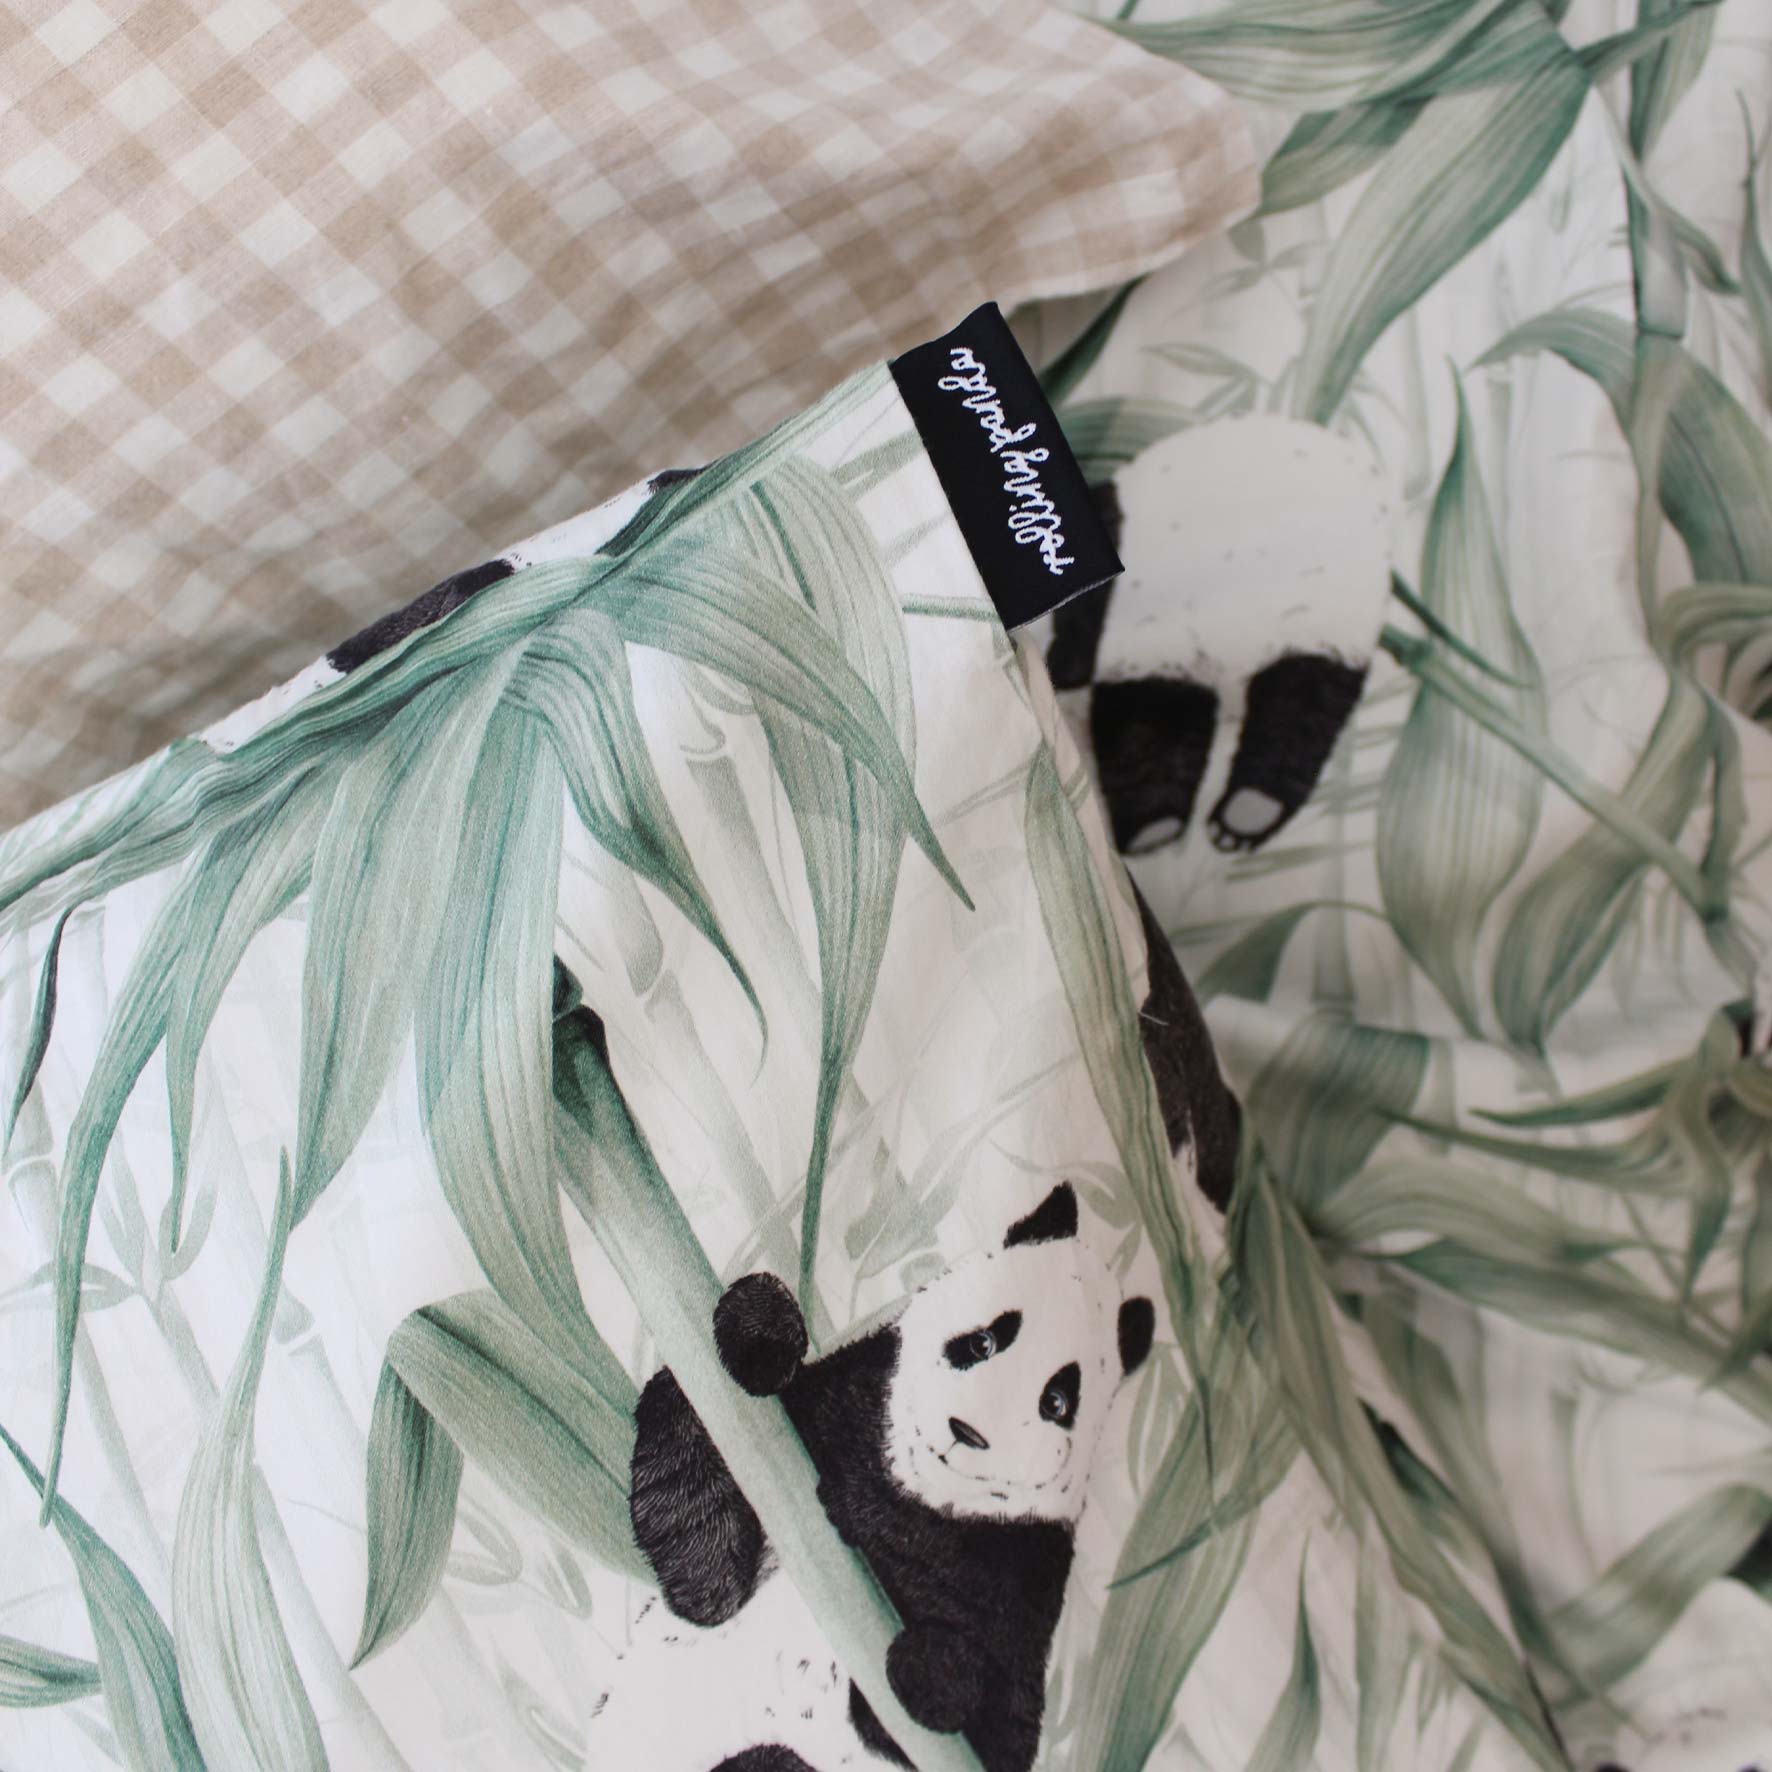 Panda Dreams Cotton Pillowcase - Rolling Panda